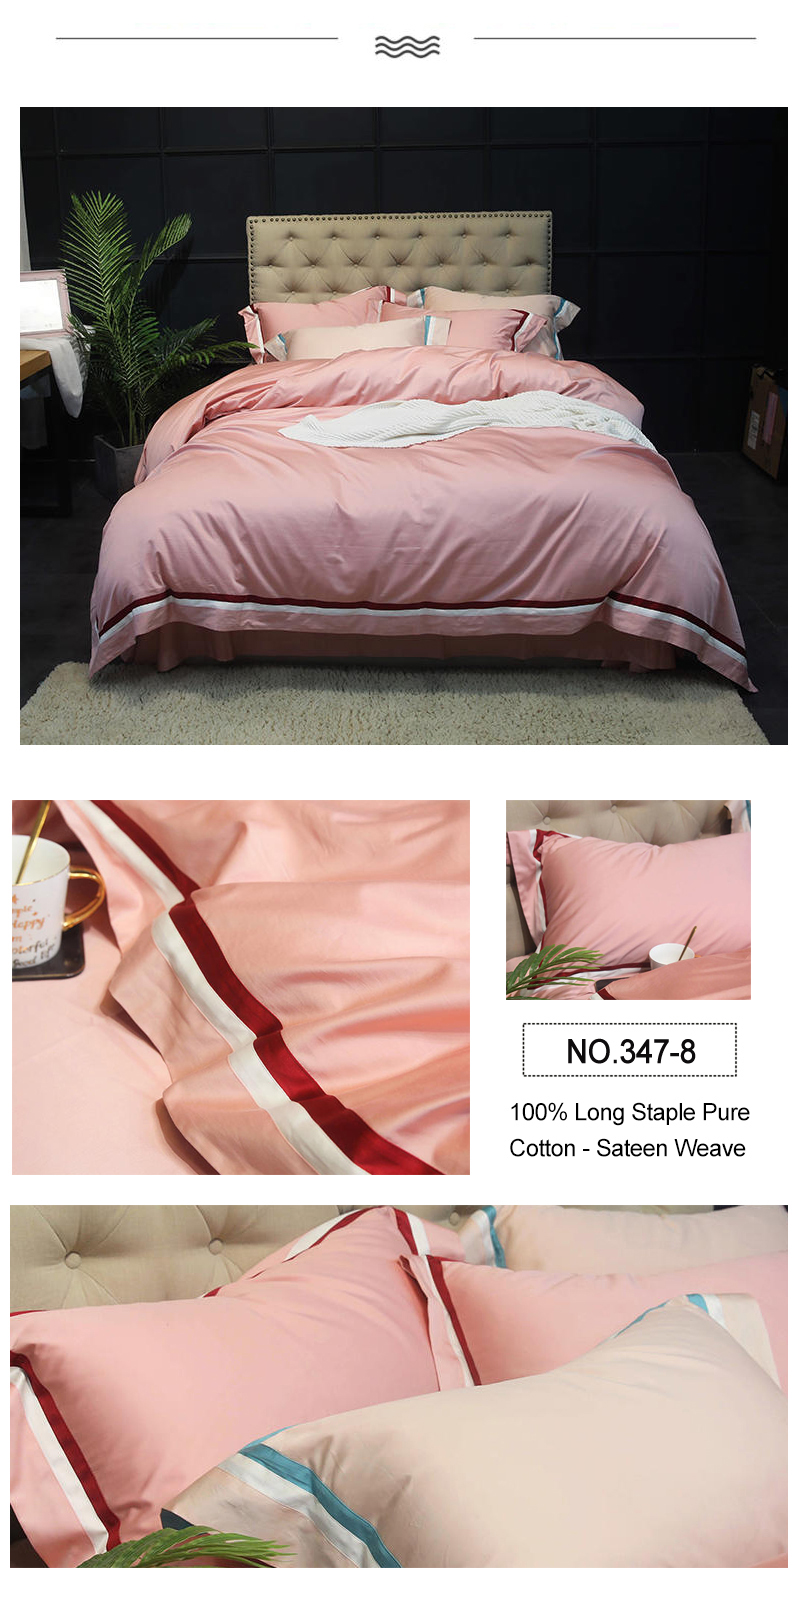 100% Long Staple Cotton Bedding Set Good Quality